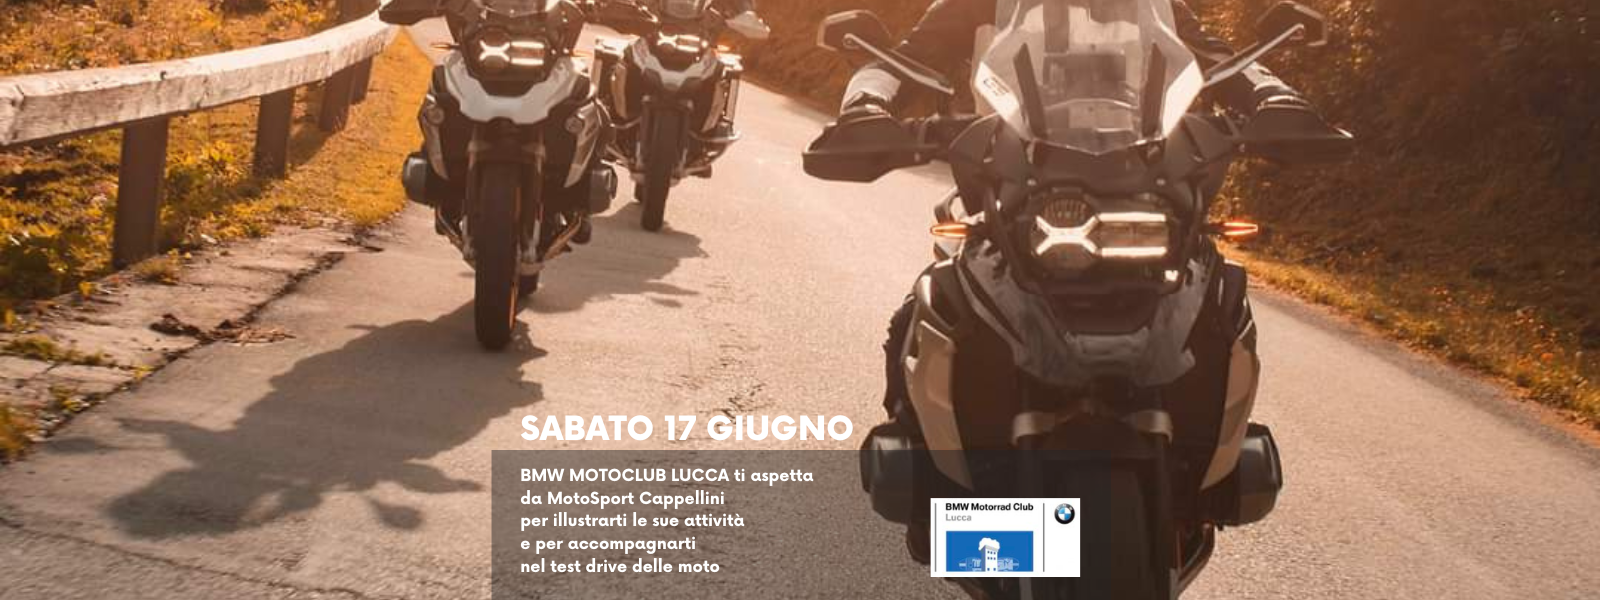 BMW Motoclub Lucca: test drive sabato 17 giugno!